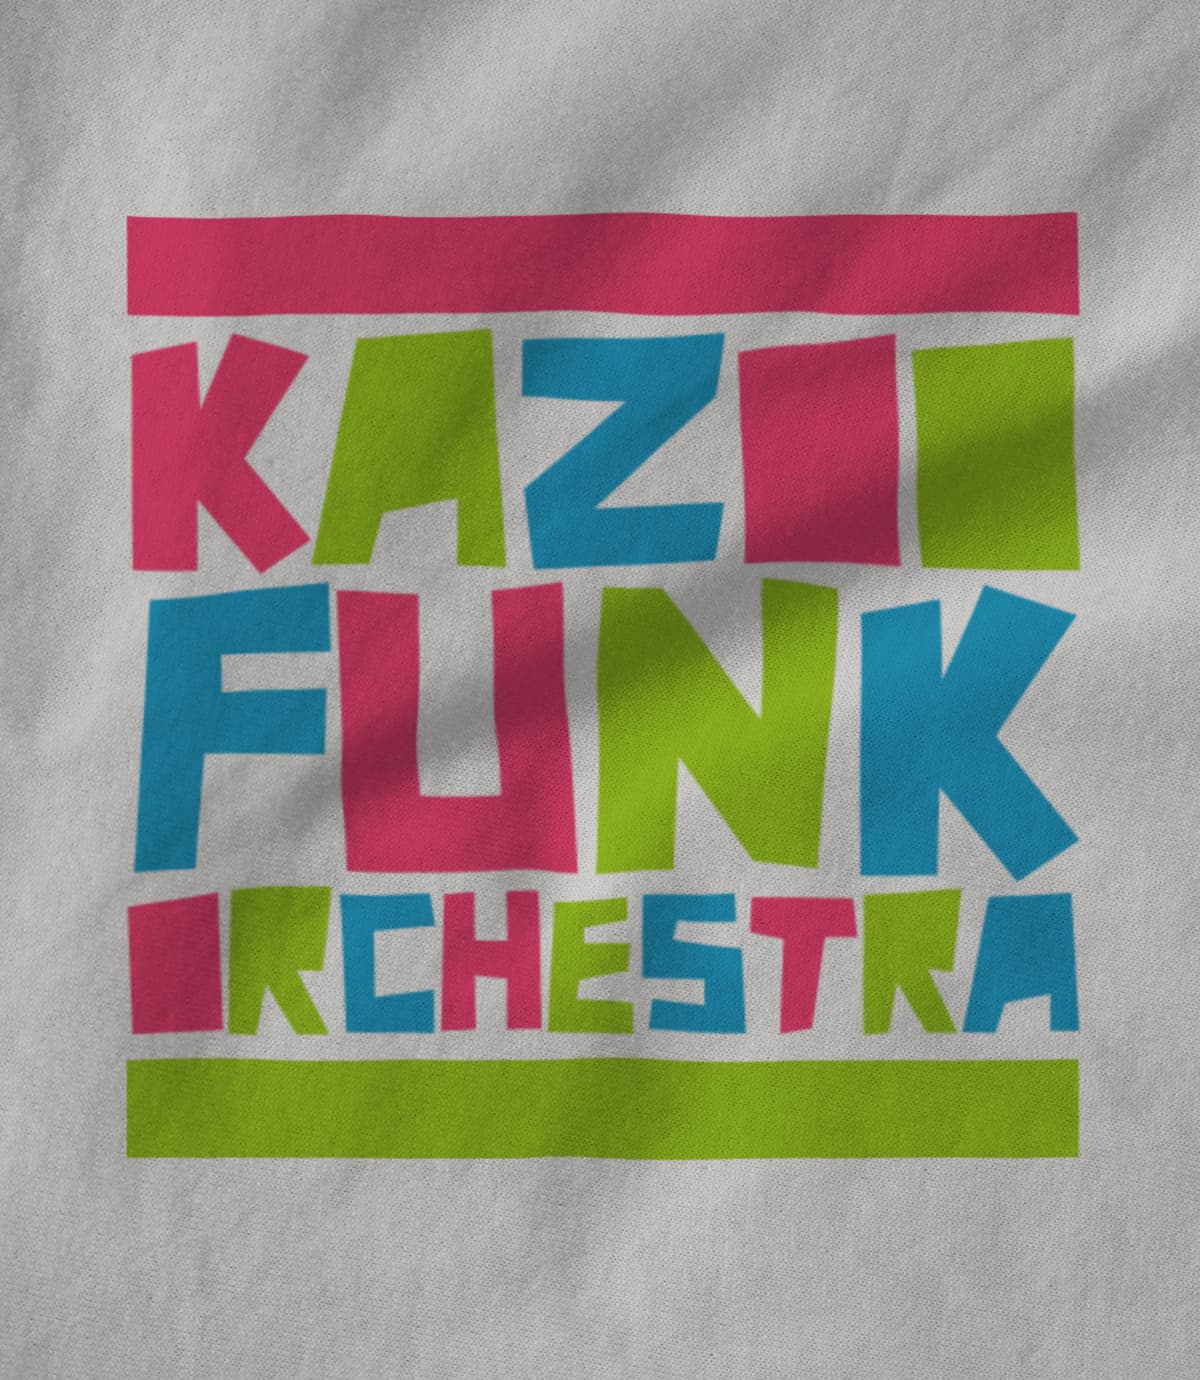 The Kazoo Funk Orchestra